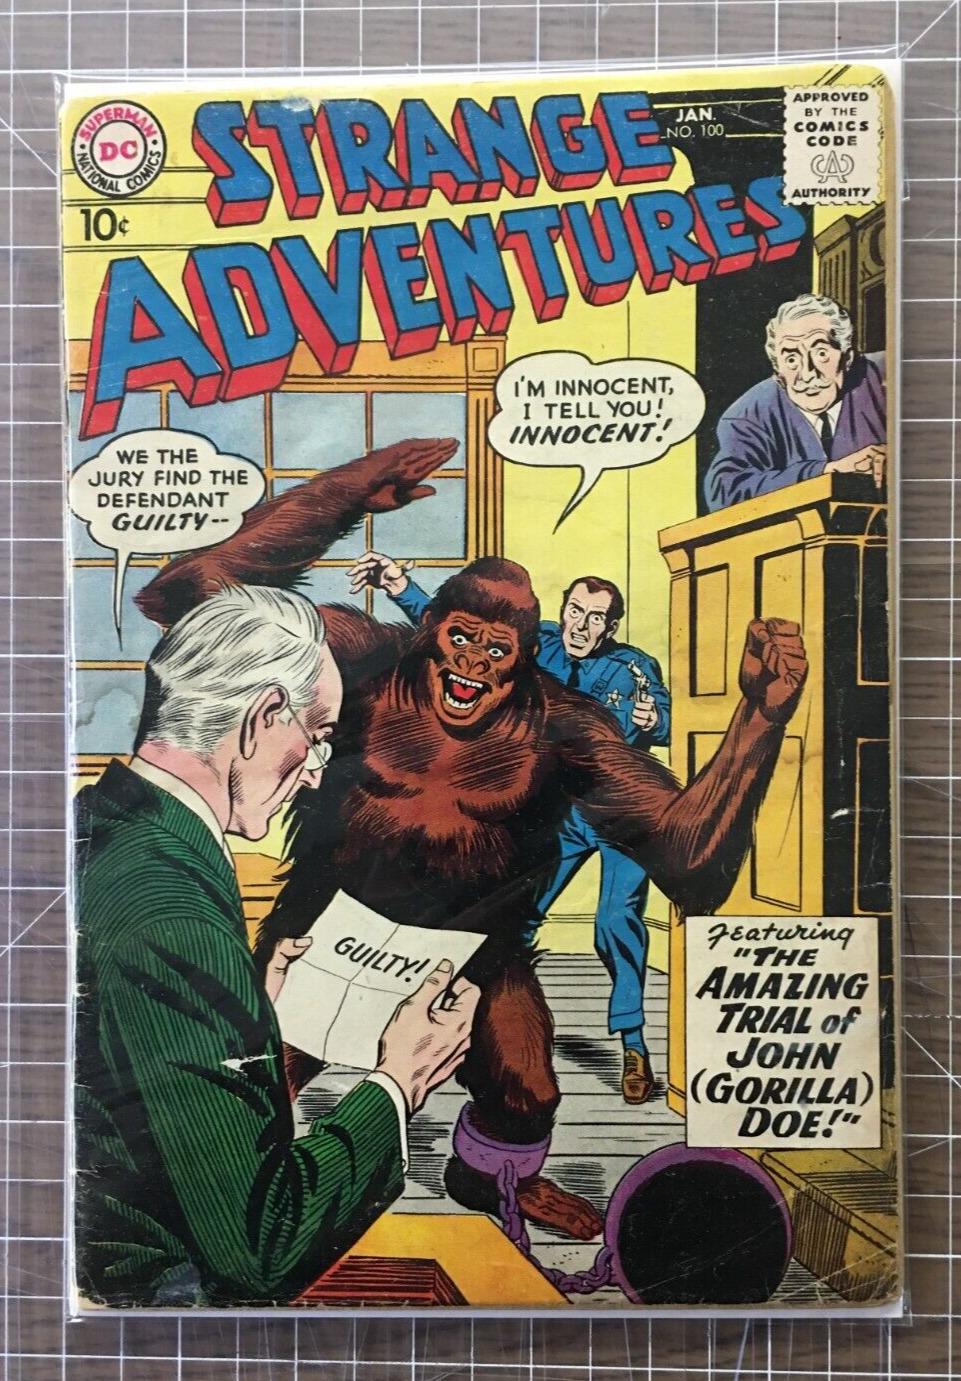 Strange Adventures #100 John Gorilla Doe - DC Comic (Jan, 1959) 1.5-2.5